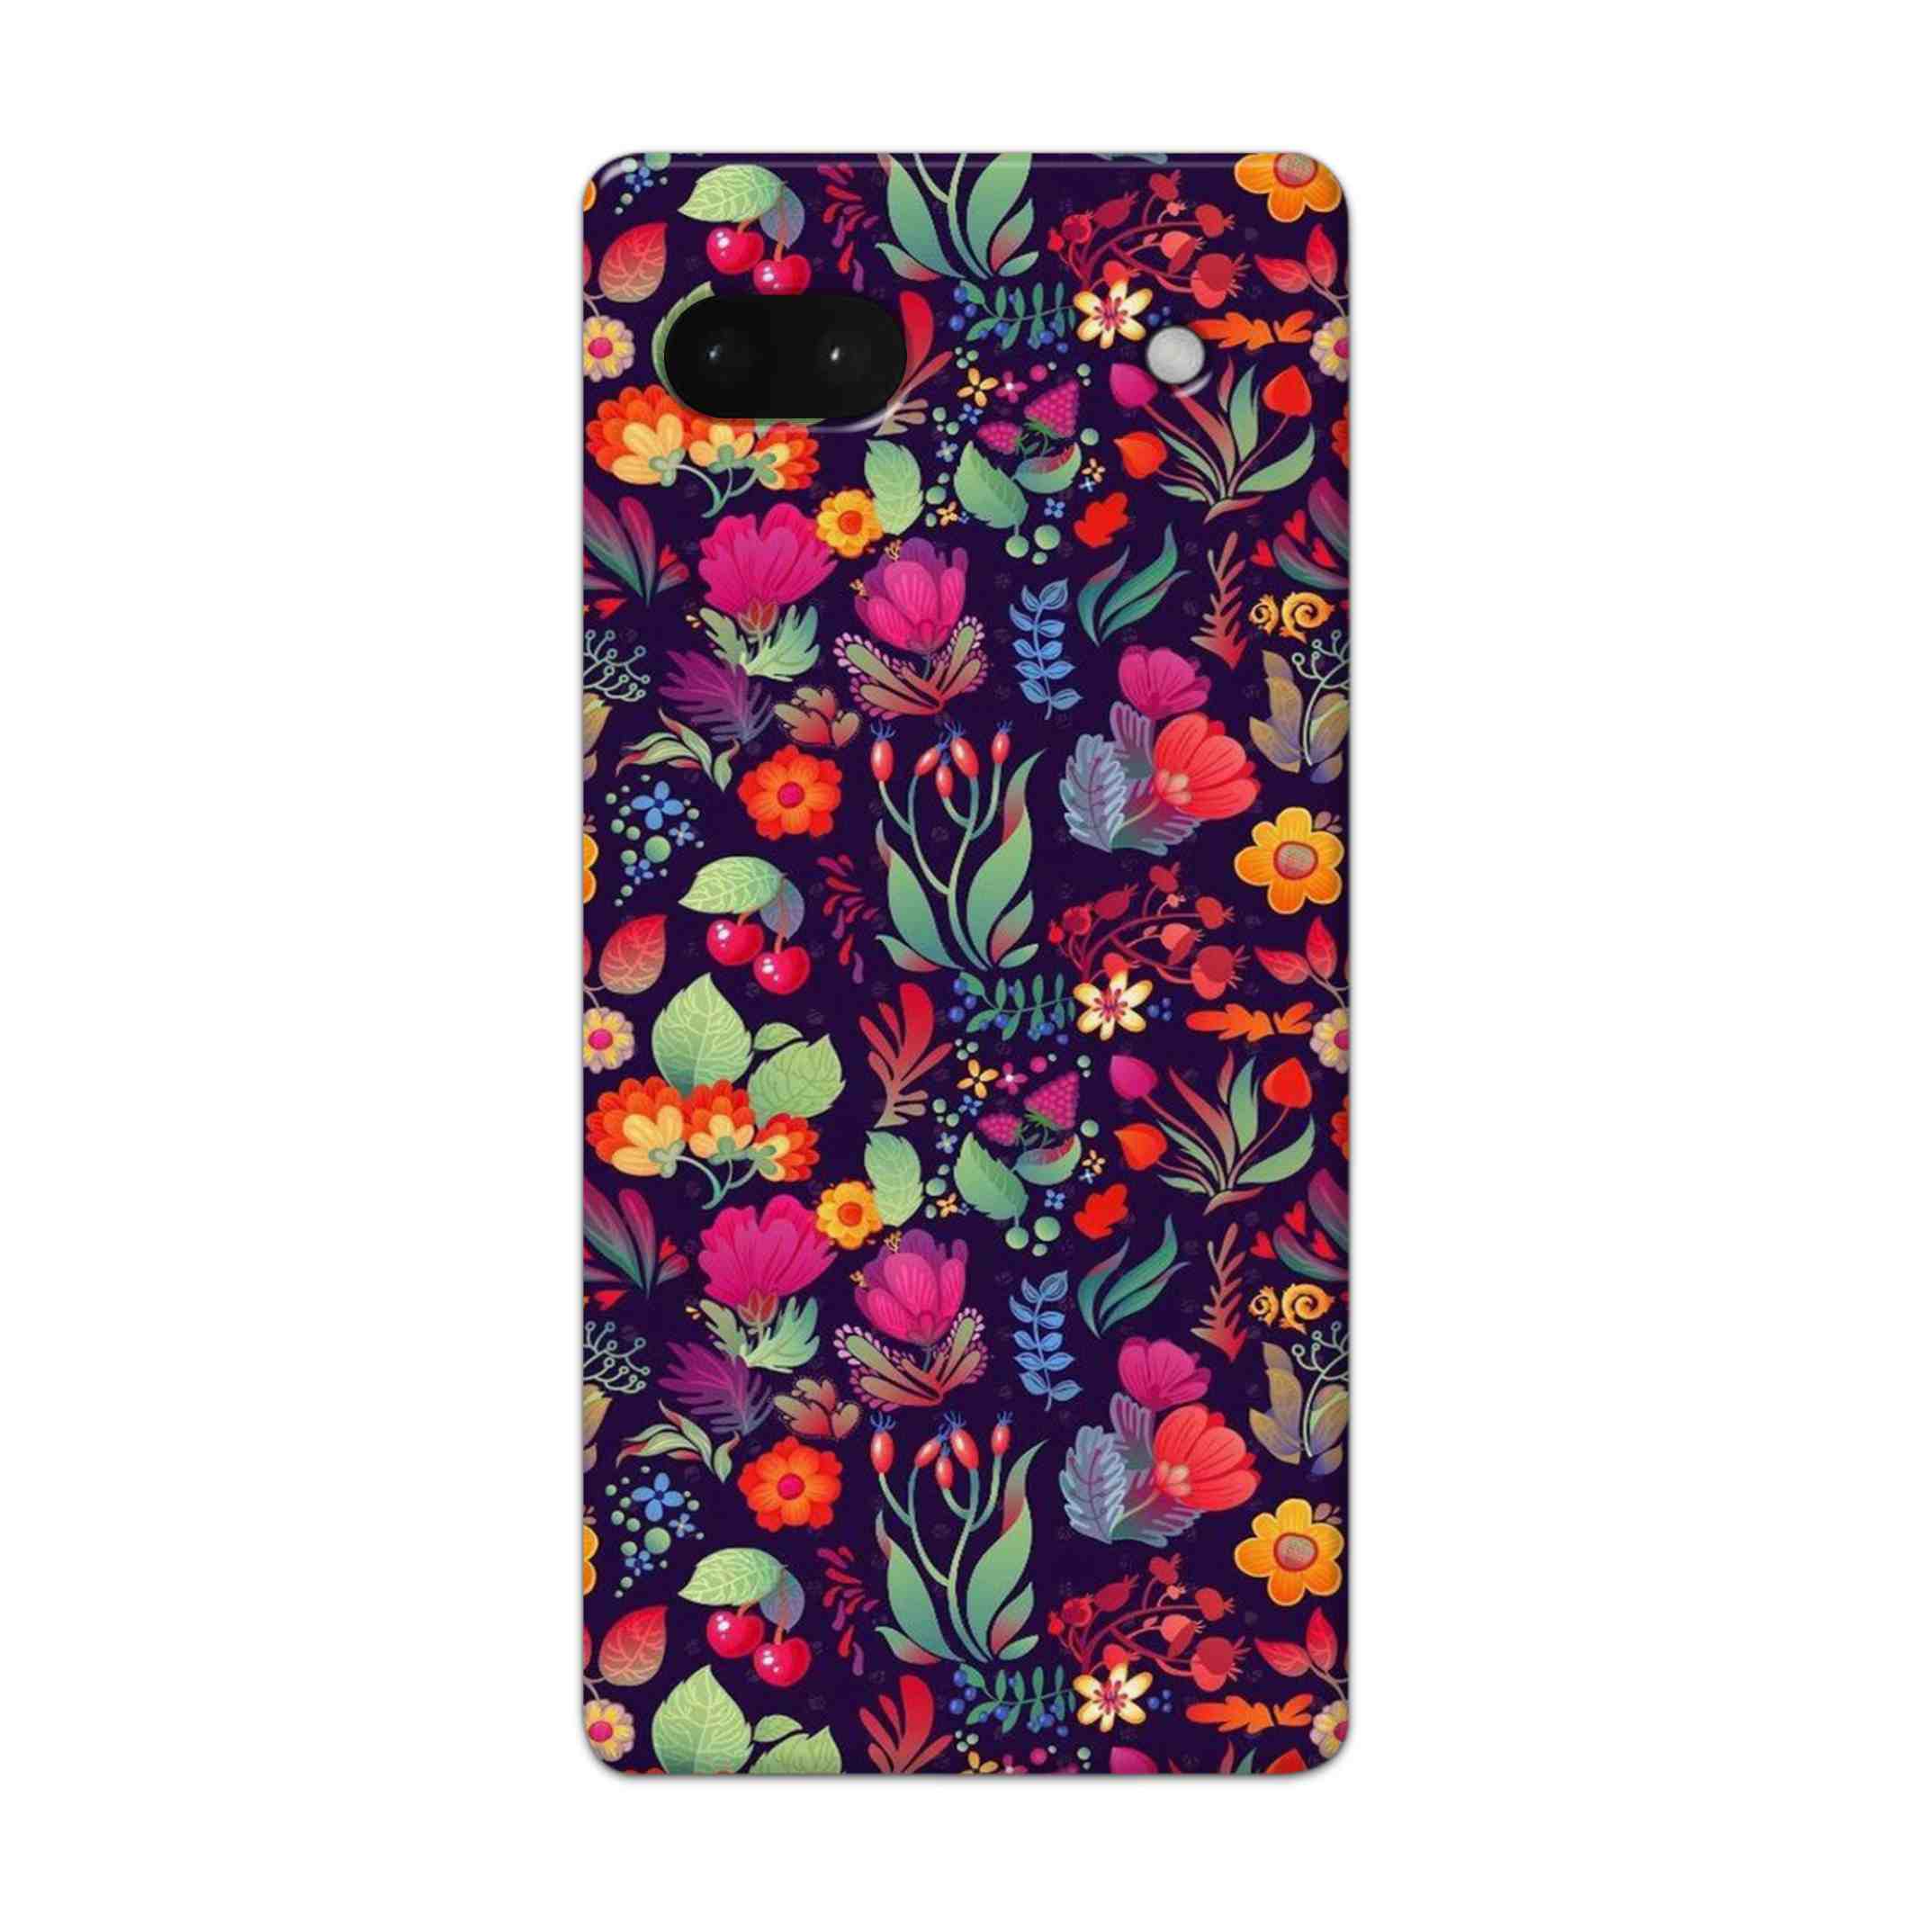 Buy Fruits Flower Hard Back Mobile Phone Case Cover For Google Pixel 6a Online